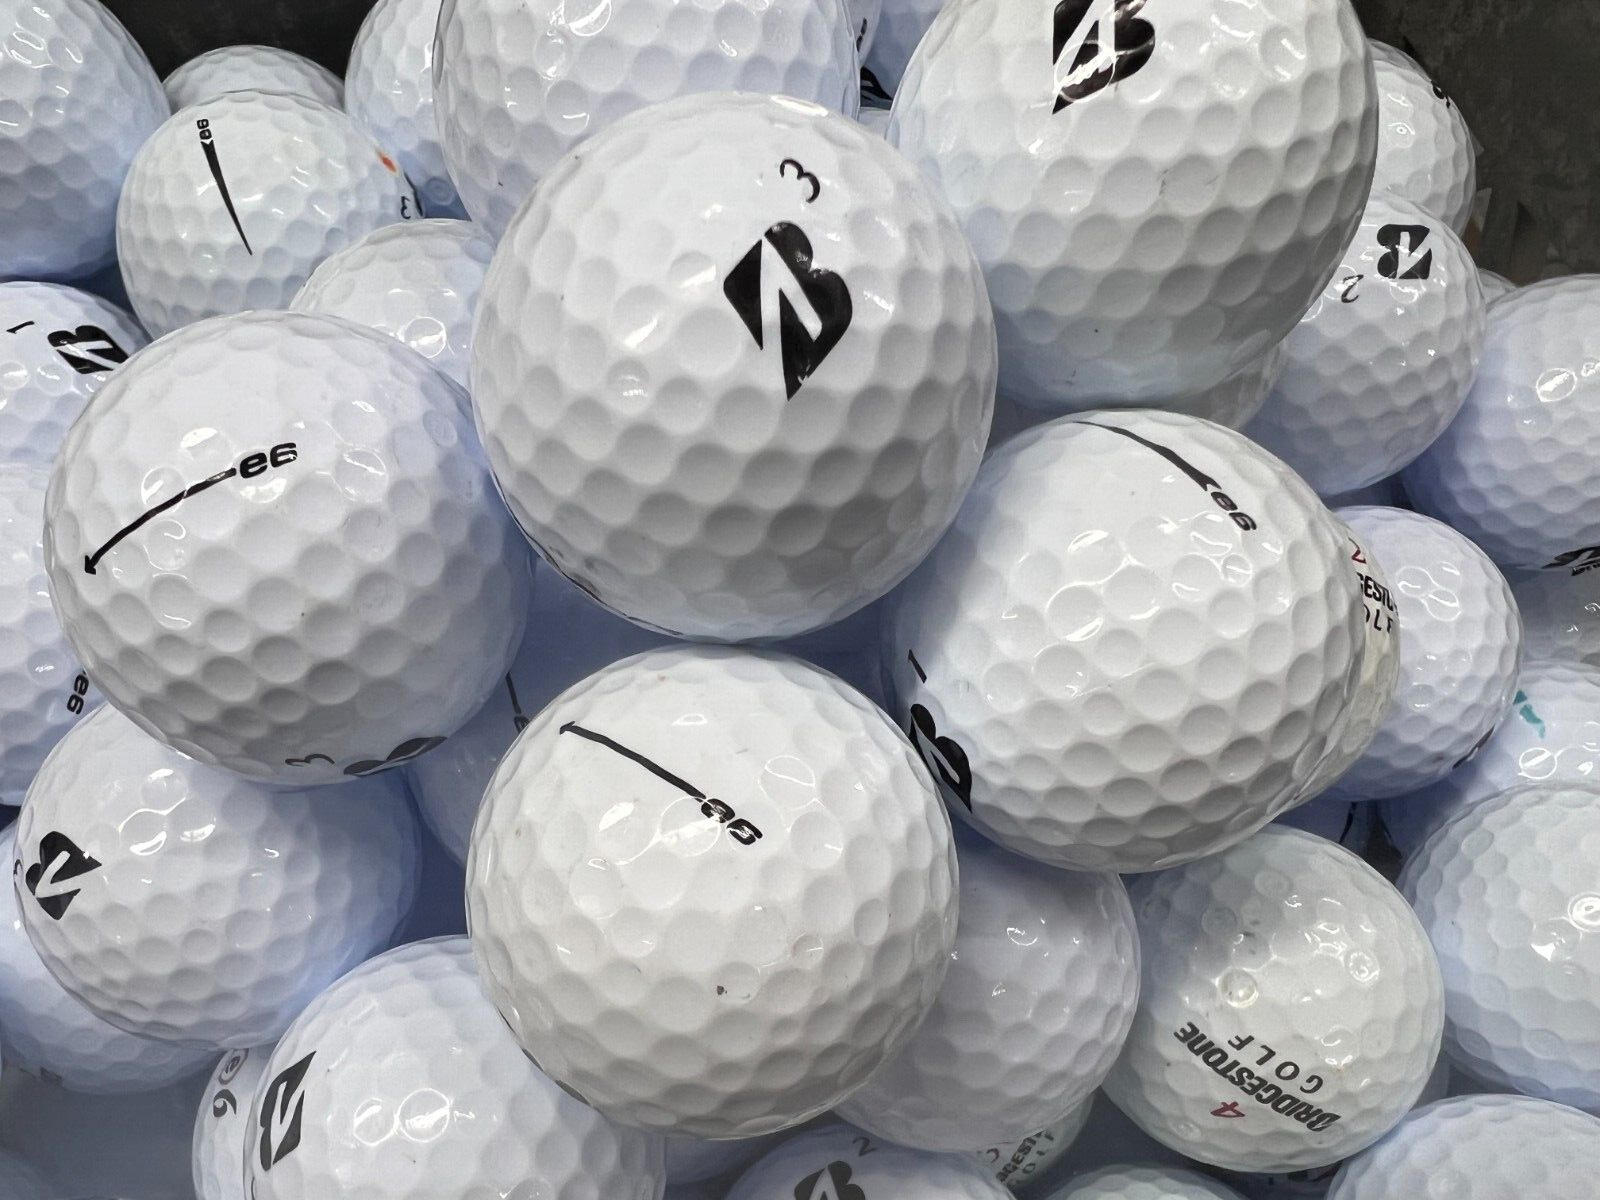 24 Near Mint Bridgestone E6 AAAA Used Golf Balls